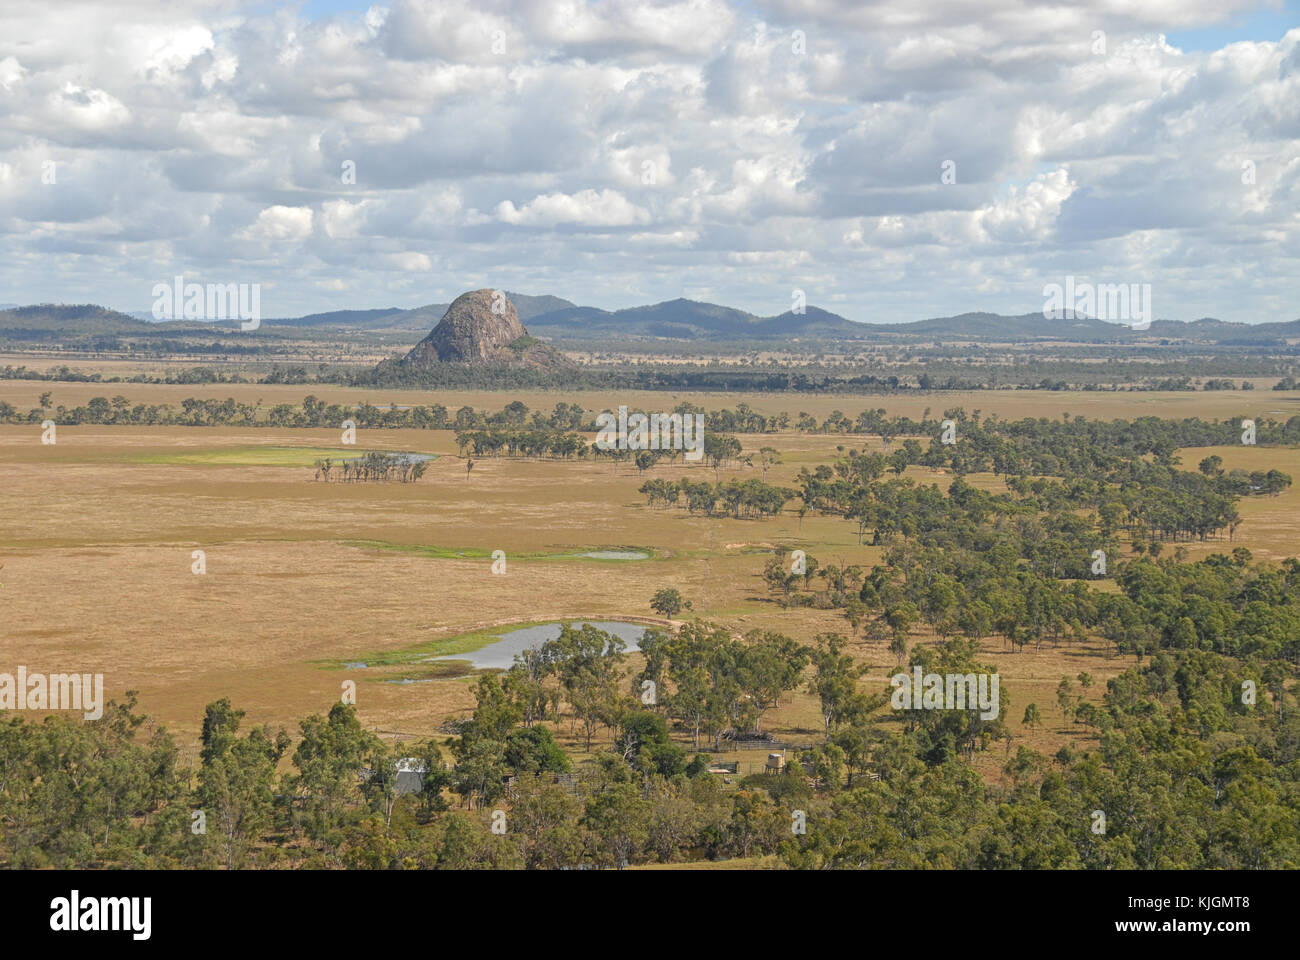 View of Mount Jim Crow National Park from peak of Mount Jim Crow, Australia Stock Photo